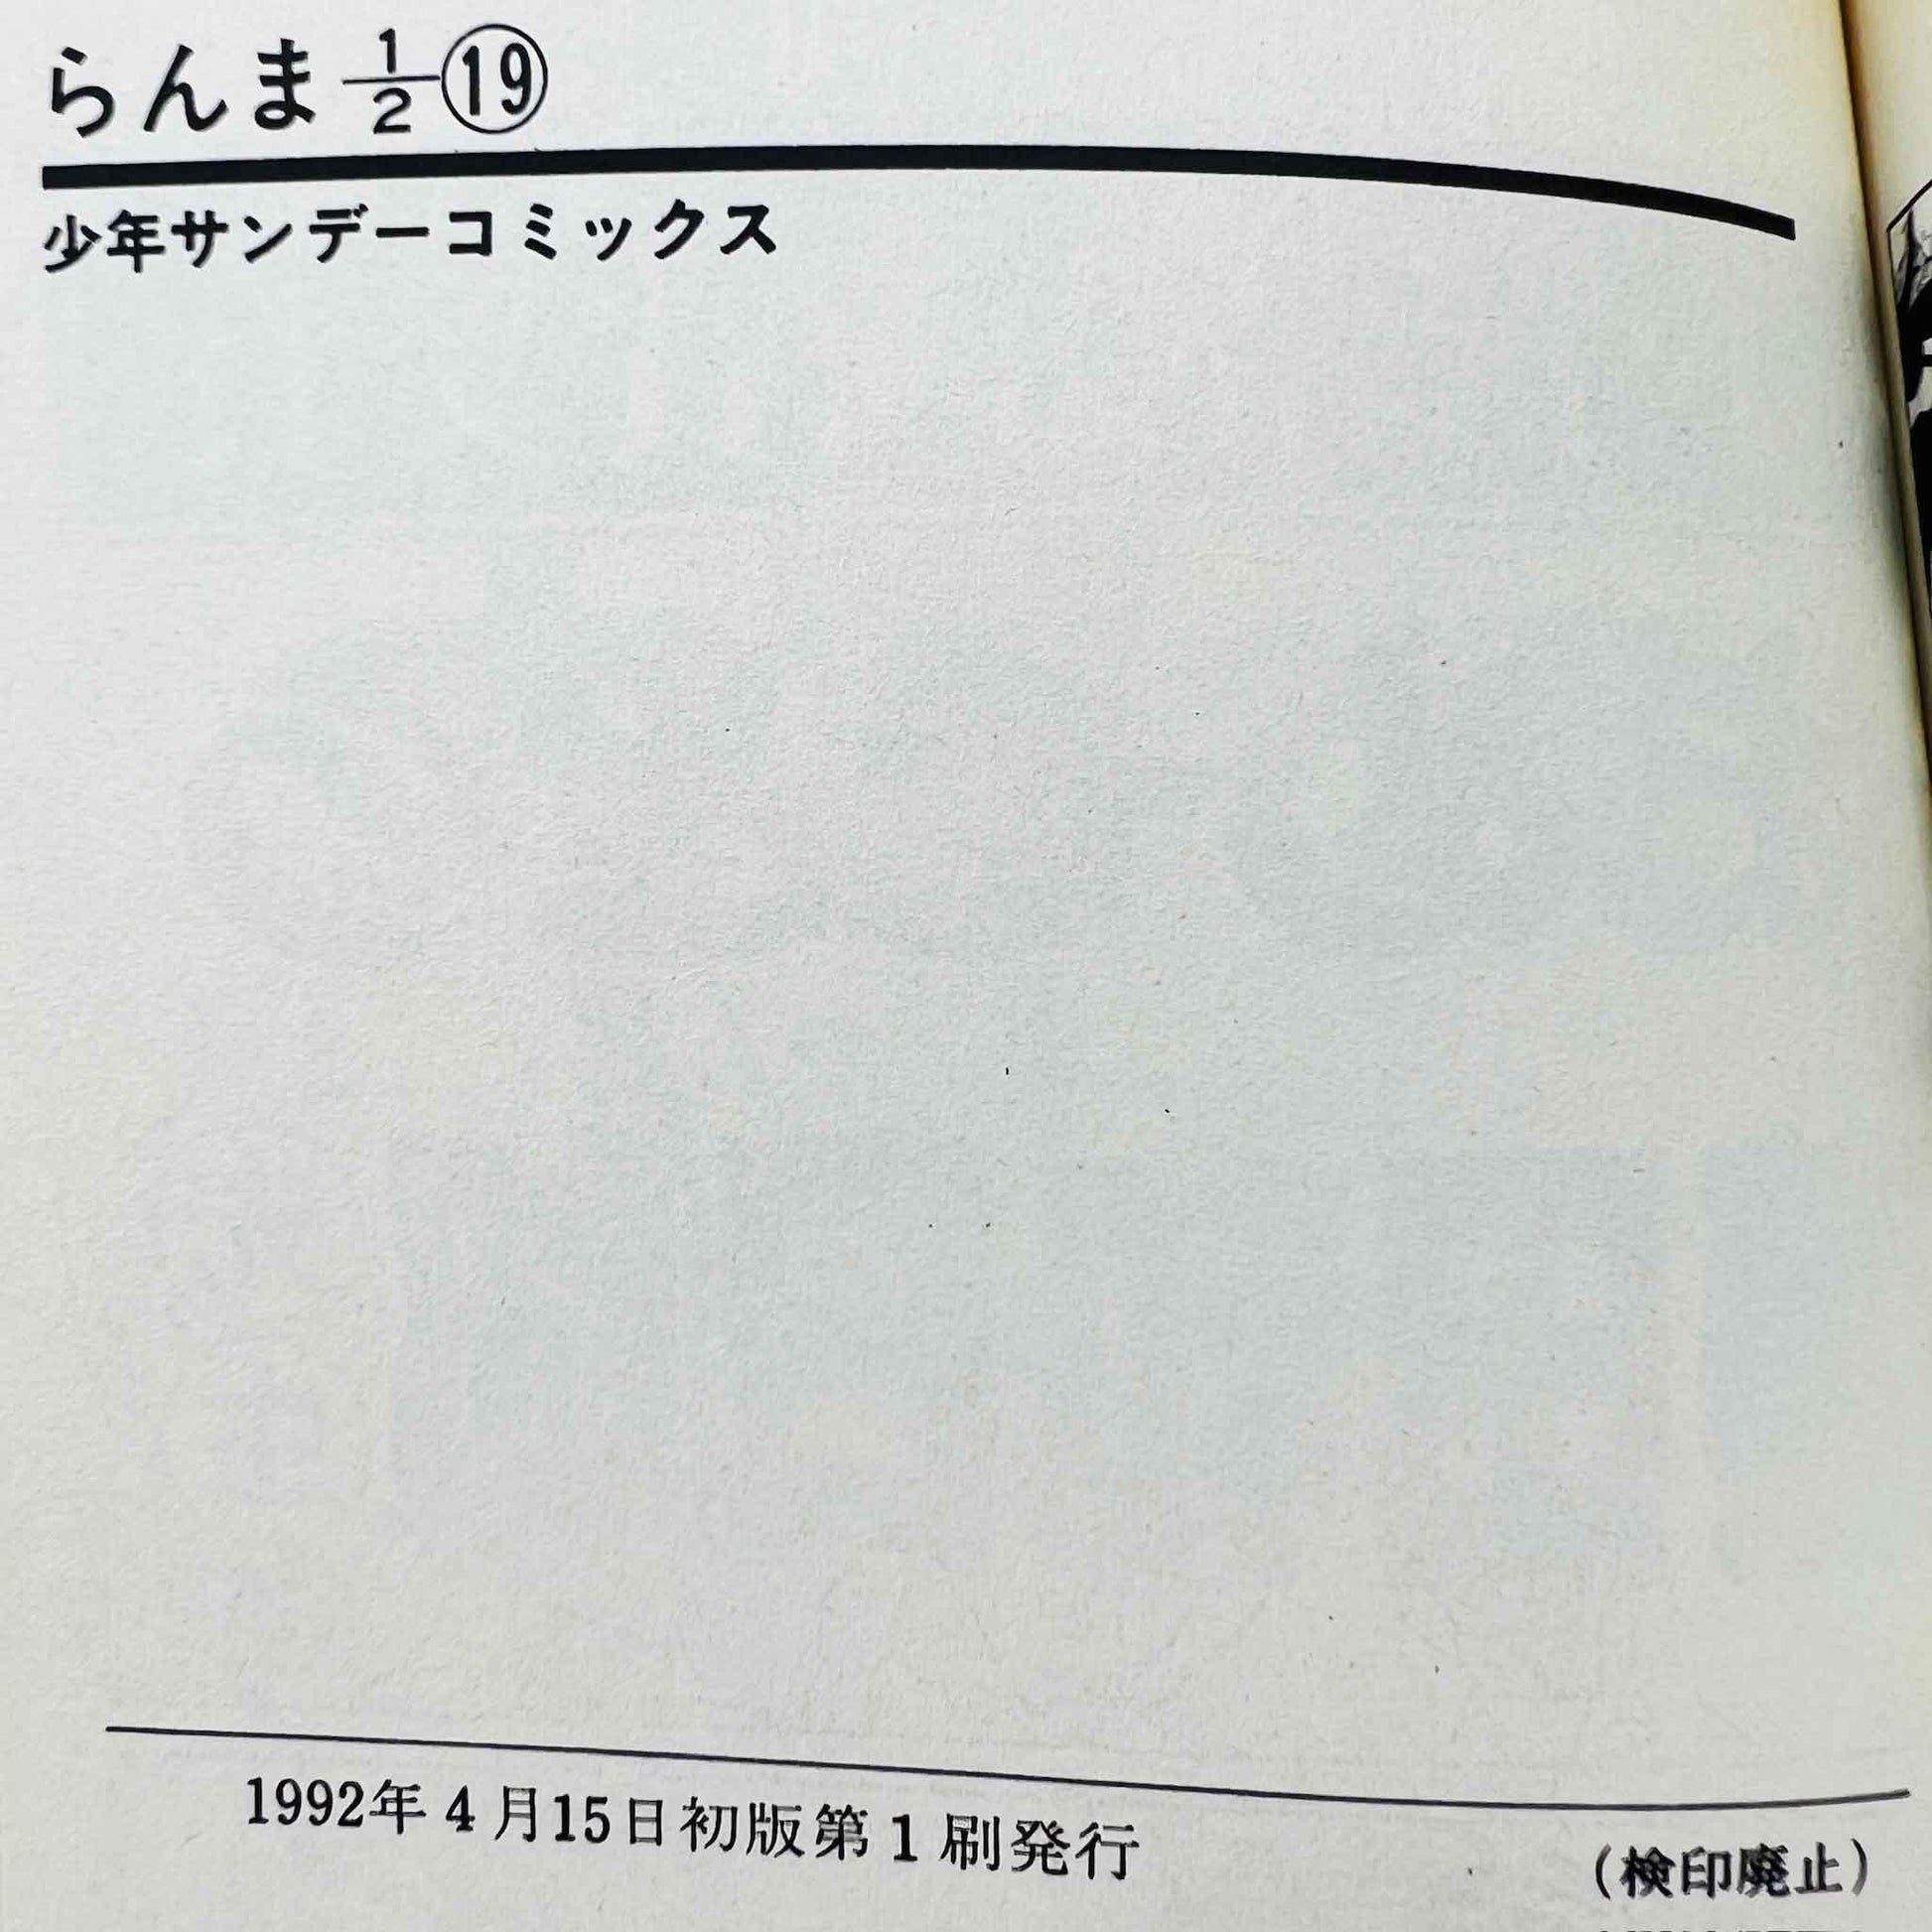 Ranma ½ - Volume 19 - 1stPrint.net - 1st First Print Edition Manga Store - M-RANMA-19-001